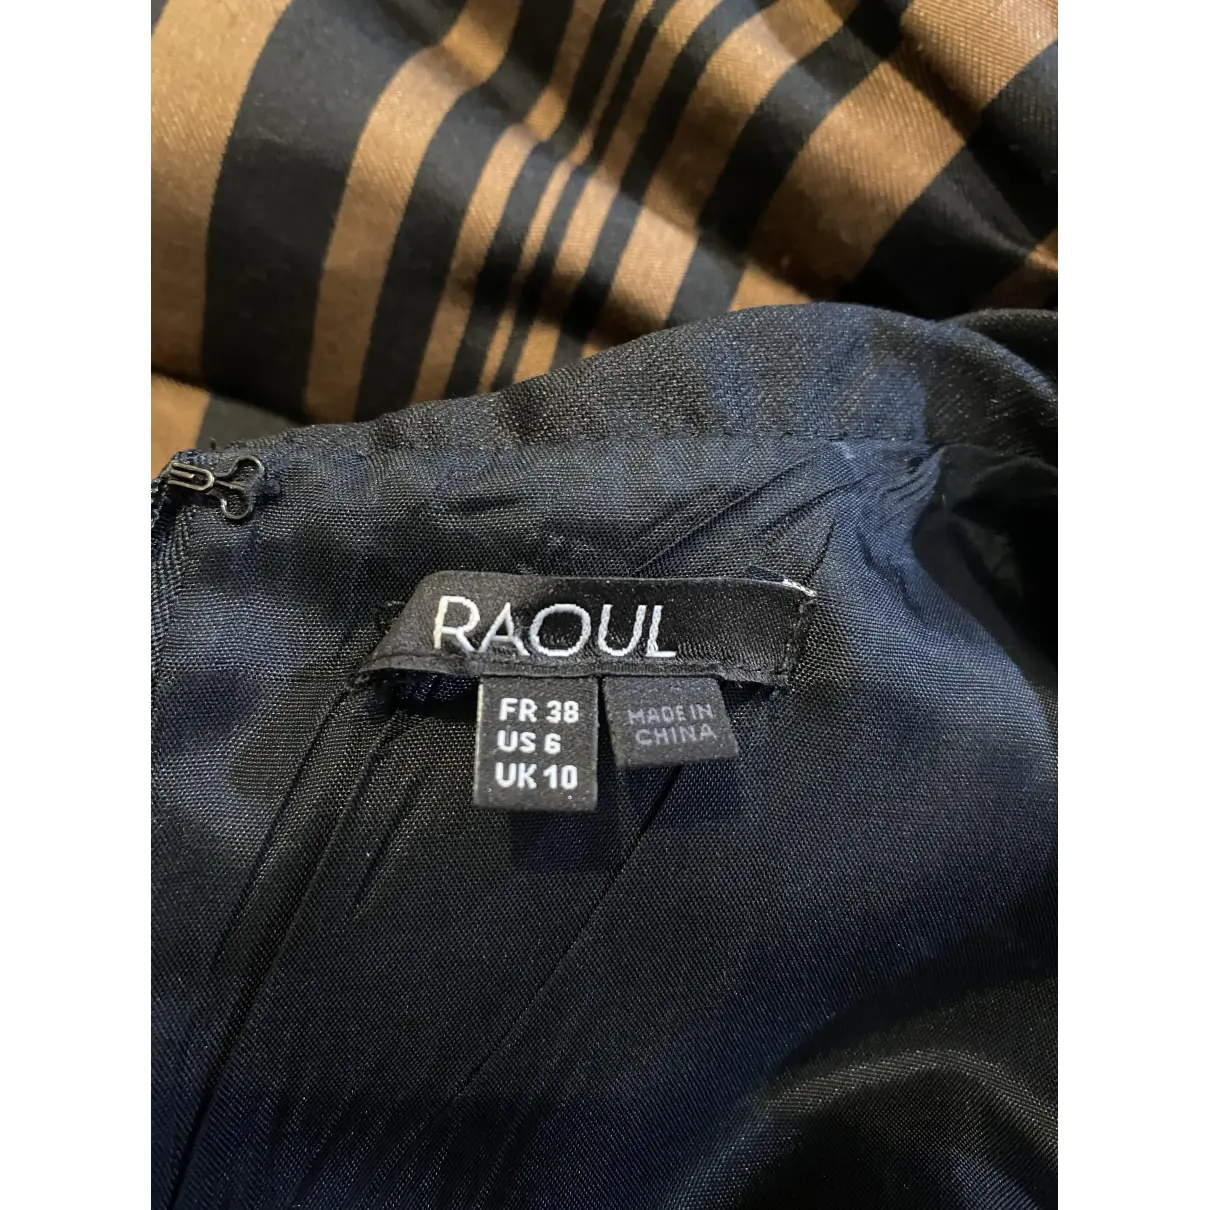 Buy Raoul Silk mid-length dress online